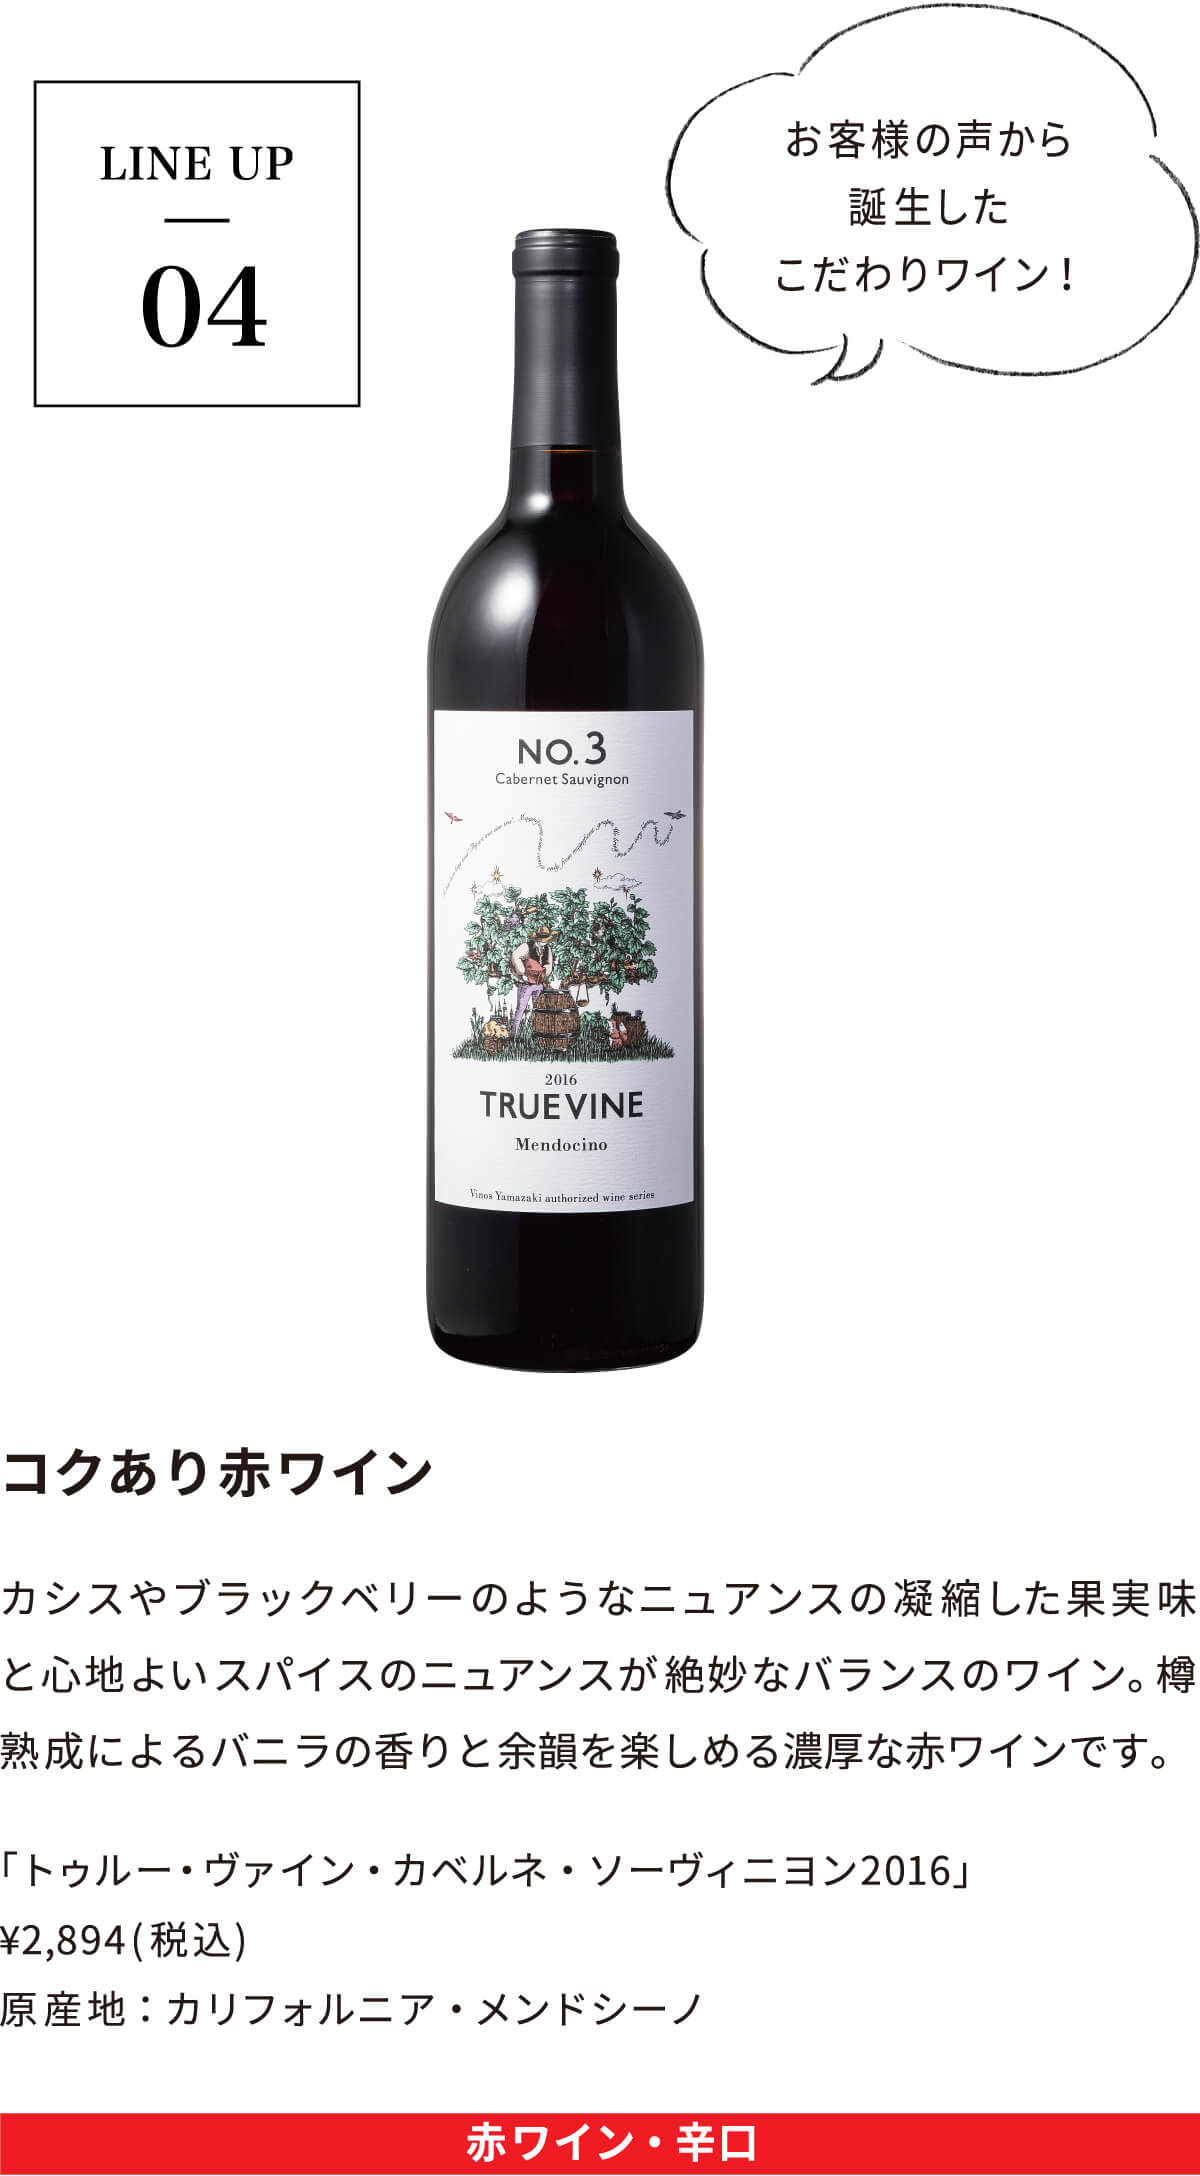 LINE UP04｜コクあり赤ワイン｜カシスやブラックベリーのようなニュアンスの
			凝縮した果実味と心地よいスパイスのニュアンスが絶妙なバランスのワイン。樽熟成によるバニラの香りと余韻を楽しめる濃厚な赤ワインです。「トゥルー・ヴァイン・カベルネ・ソーヴィニヨン2016」 ¥2,894(税込) 原産地：カリフォルニア・メンドシーノ